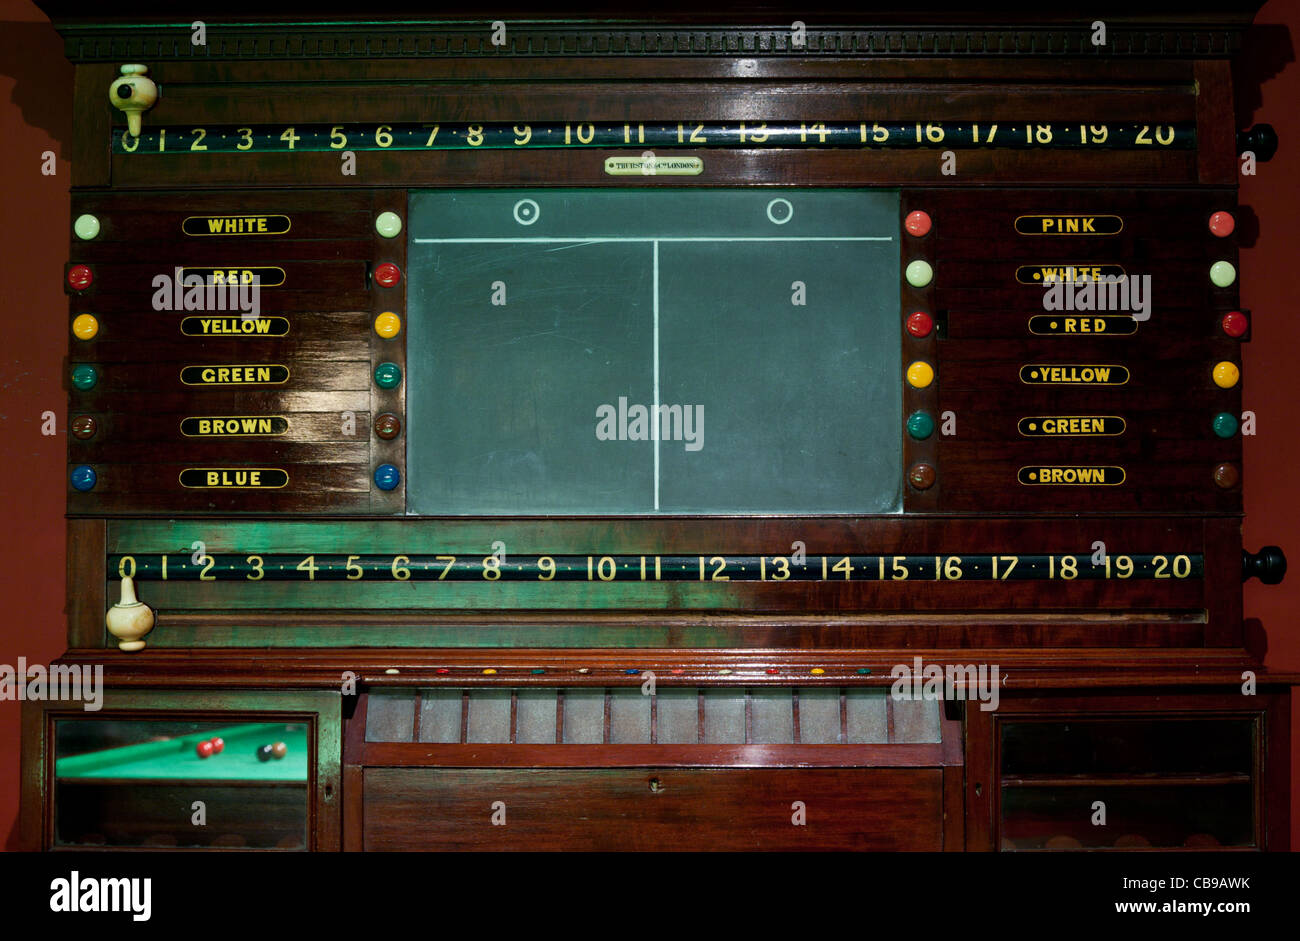 Snooker scoreboard, Billiards Room, Royal Automobile Club, London, UK Stock Photo